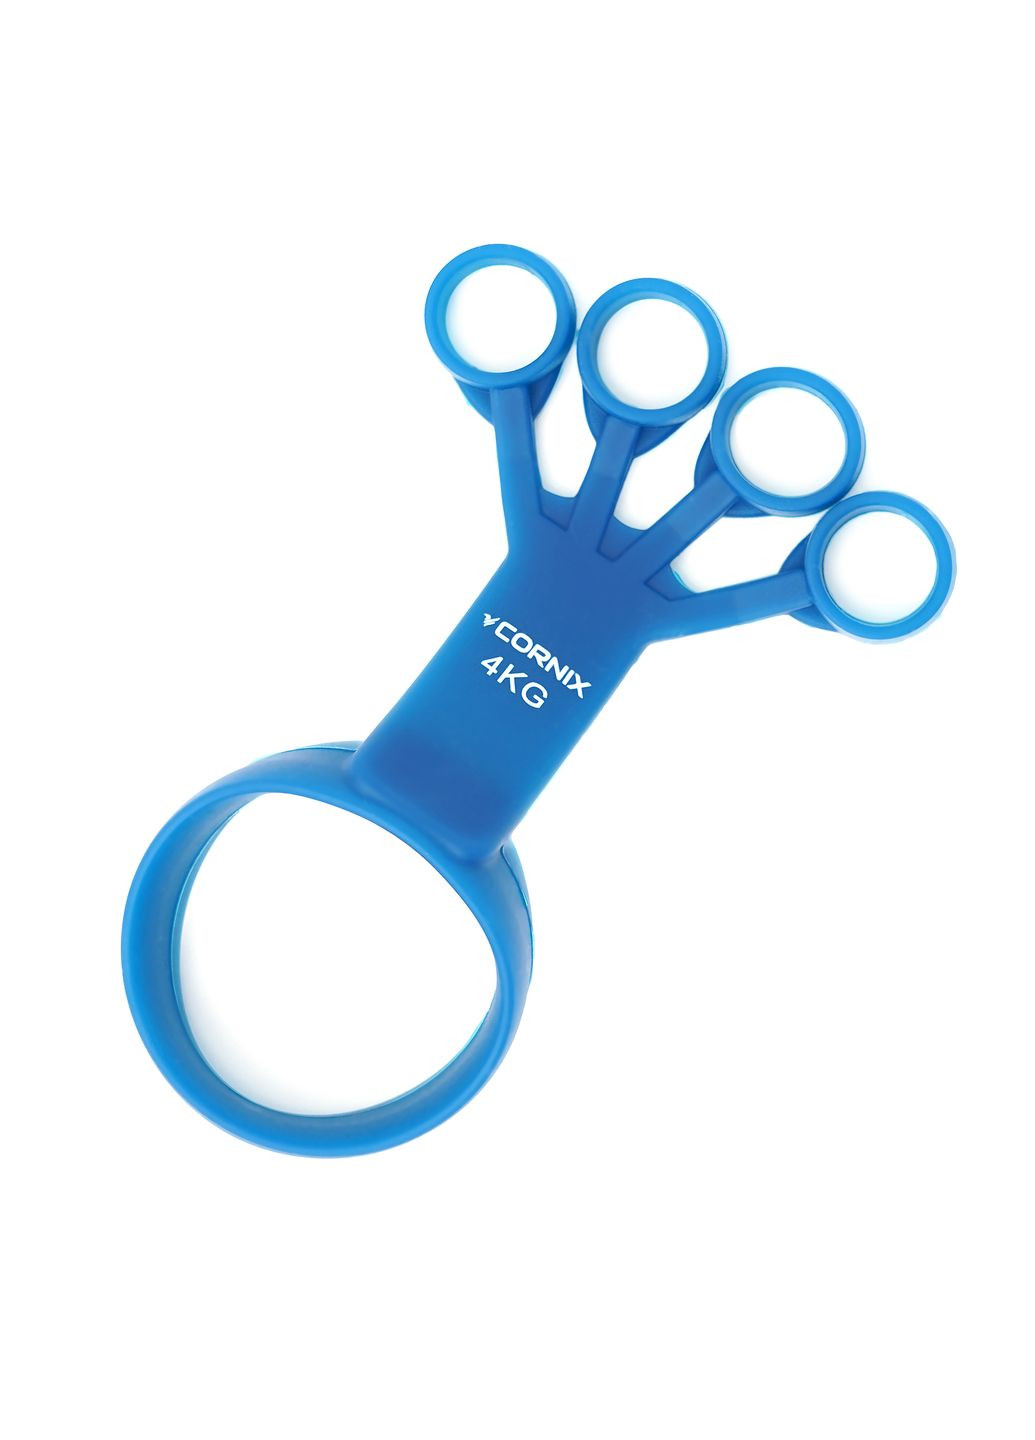 Эспандер для пальцев и запястья Finger Gripper 4 кг XR0223 Cornix xr-0223 (275334076)